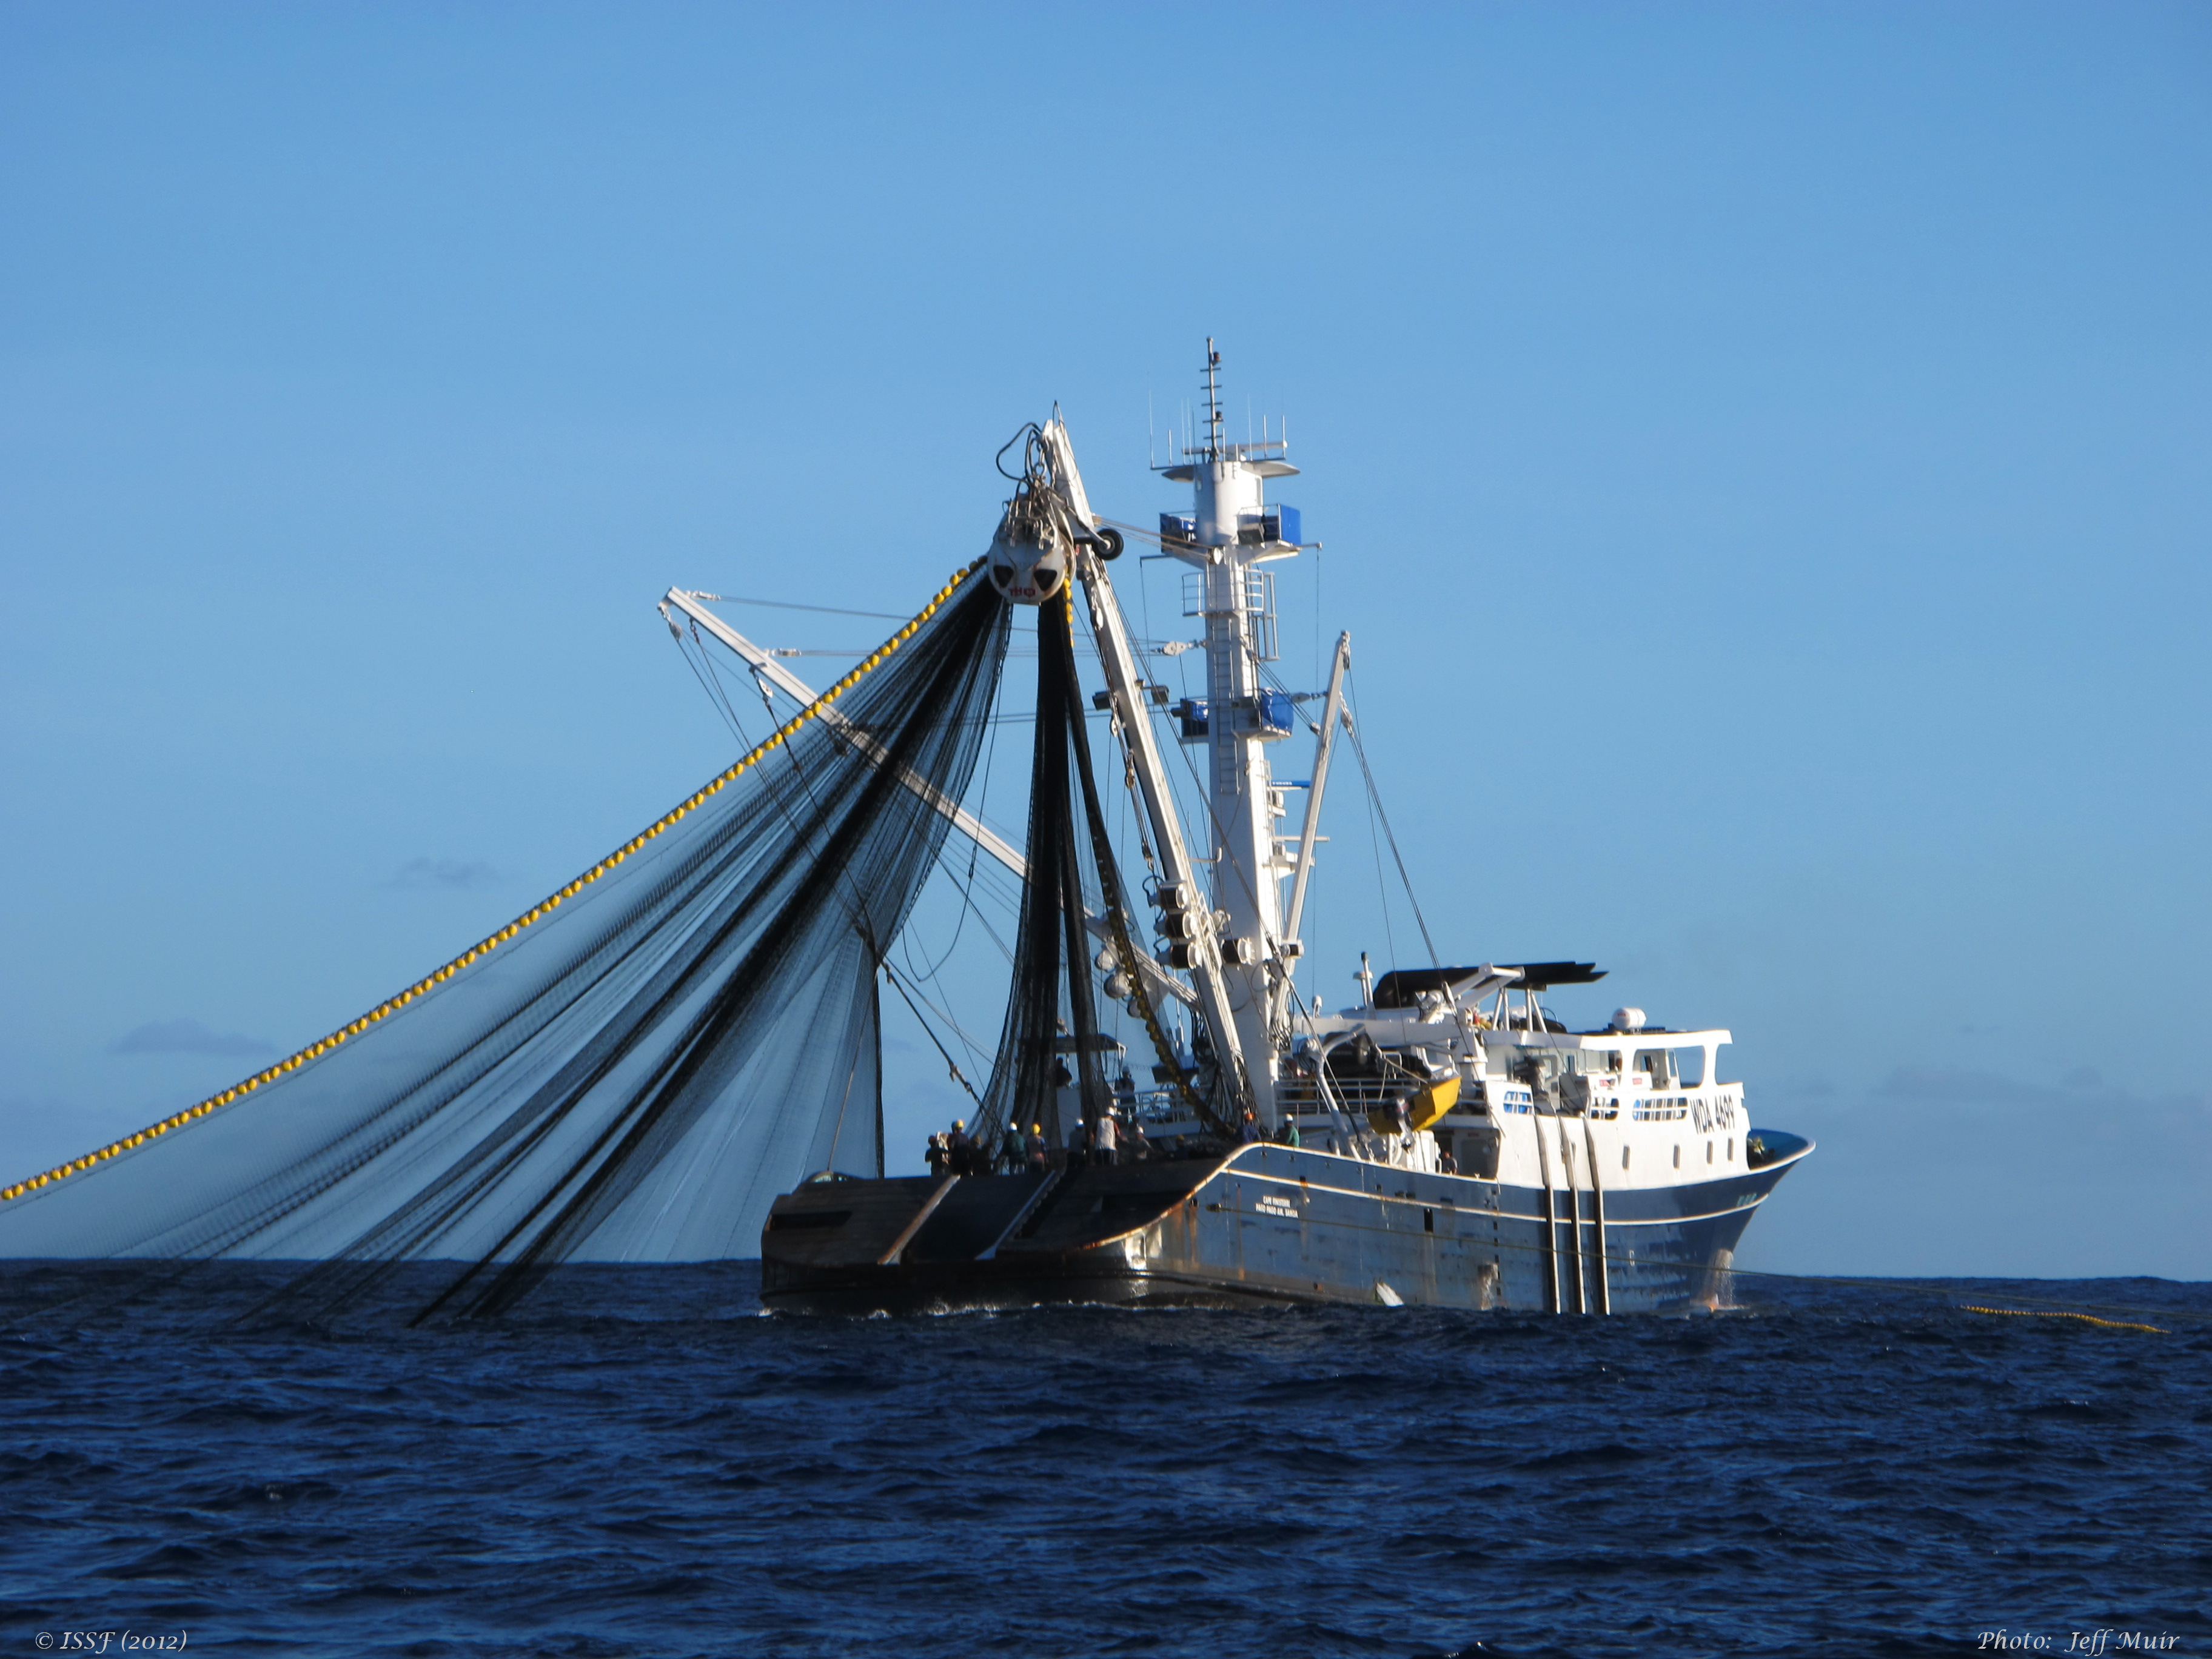 Purse Seine Net - Fishing Nets - Hi-sea